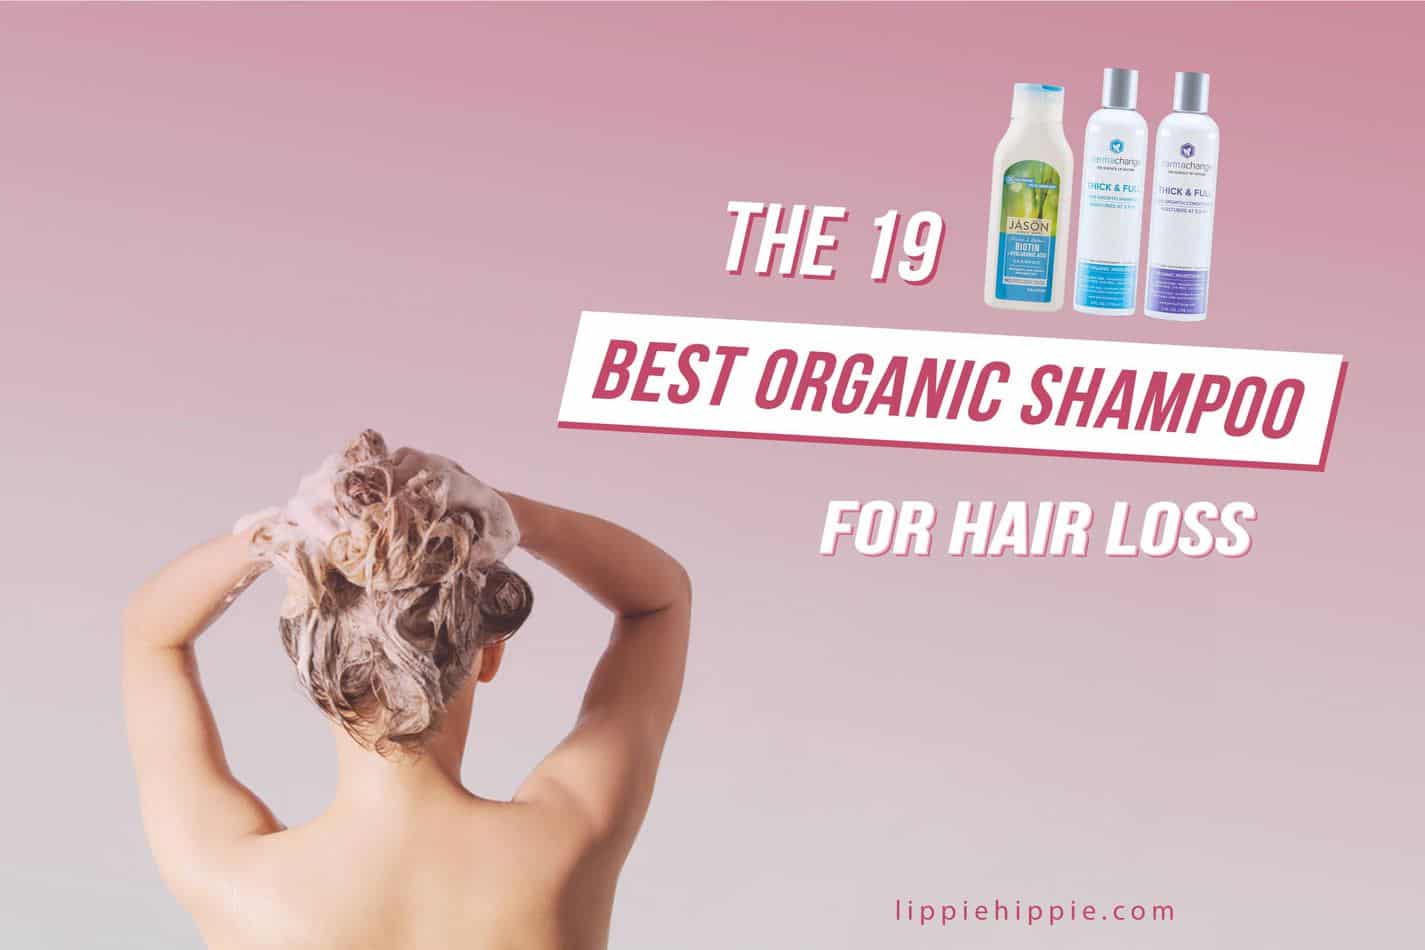 The Best Organic Shampoo for Hair Loss